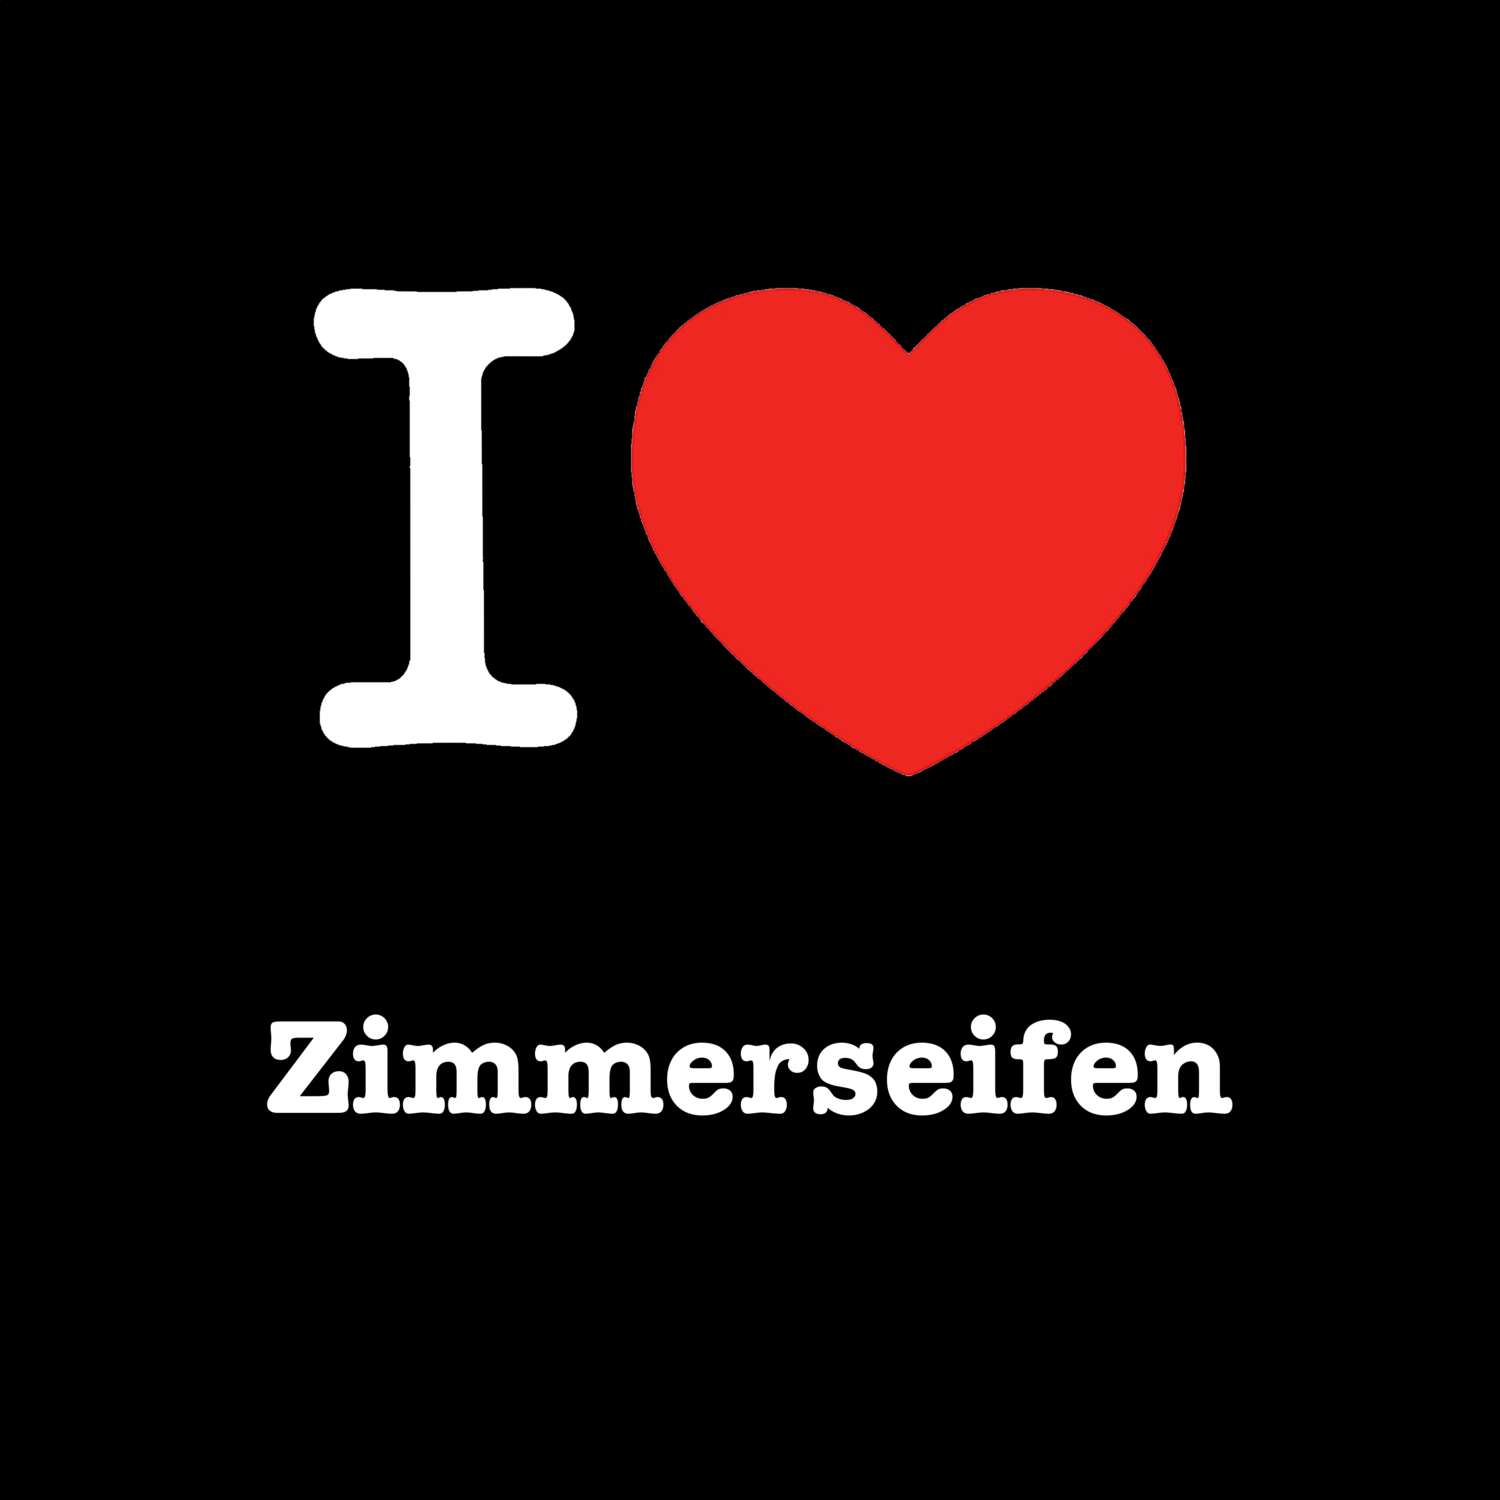 Zimmerseifen T-Shirt »I love«